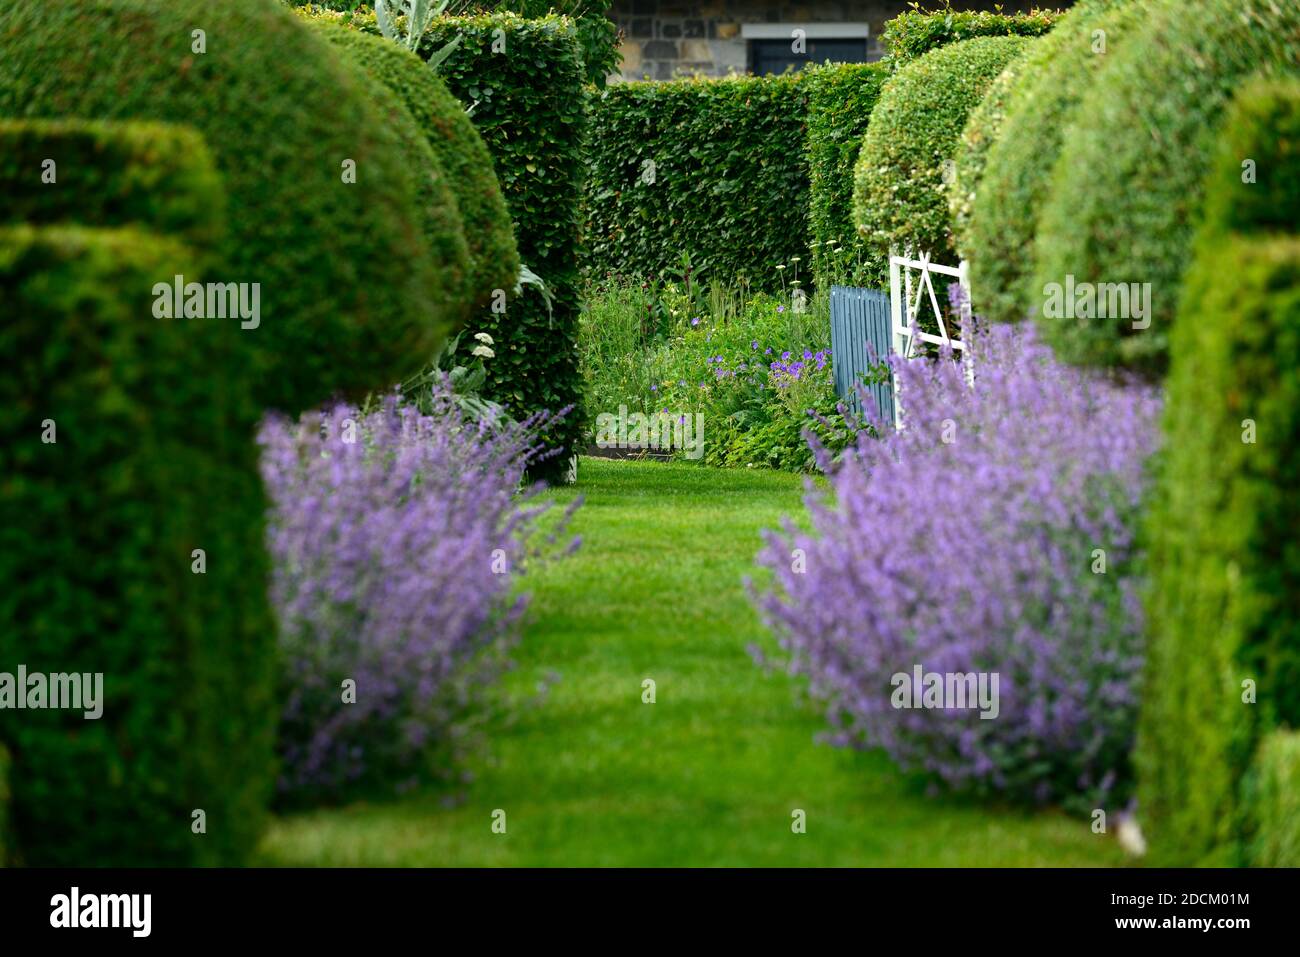 Nepeta six hills giant,Catnip,Catmint,violet,blue,flower,formal garden,box hedge,box hedging,topiary,hedging,catnip hedge,garden design,garden,gardens Stock Photo